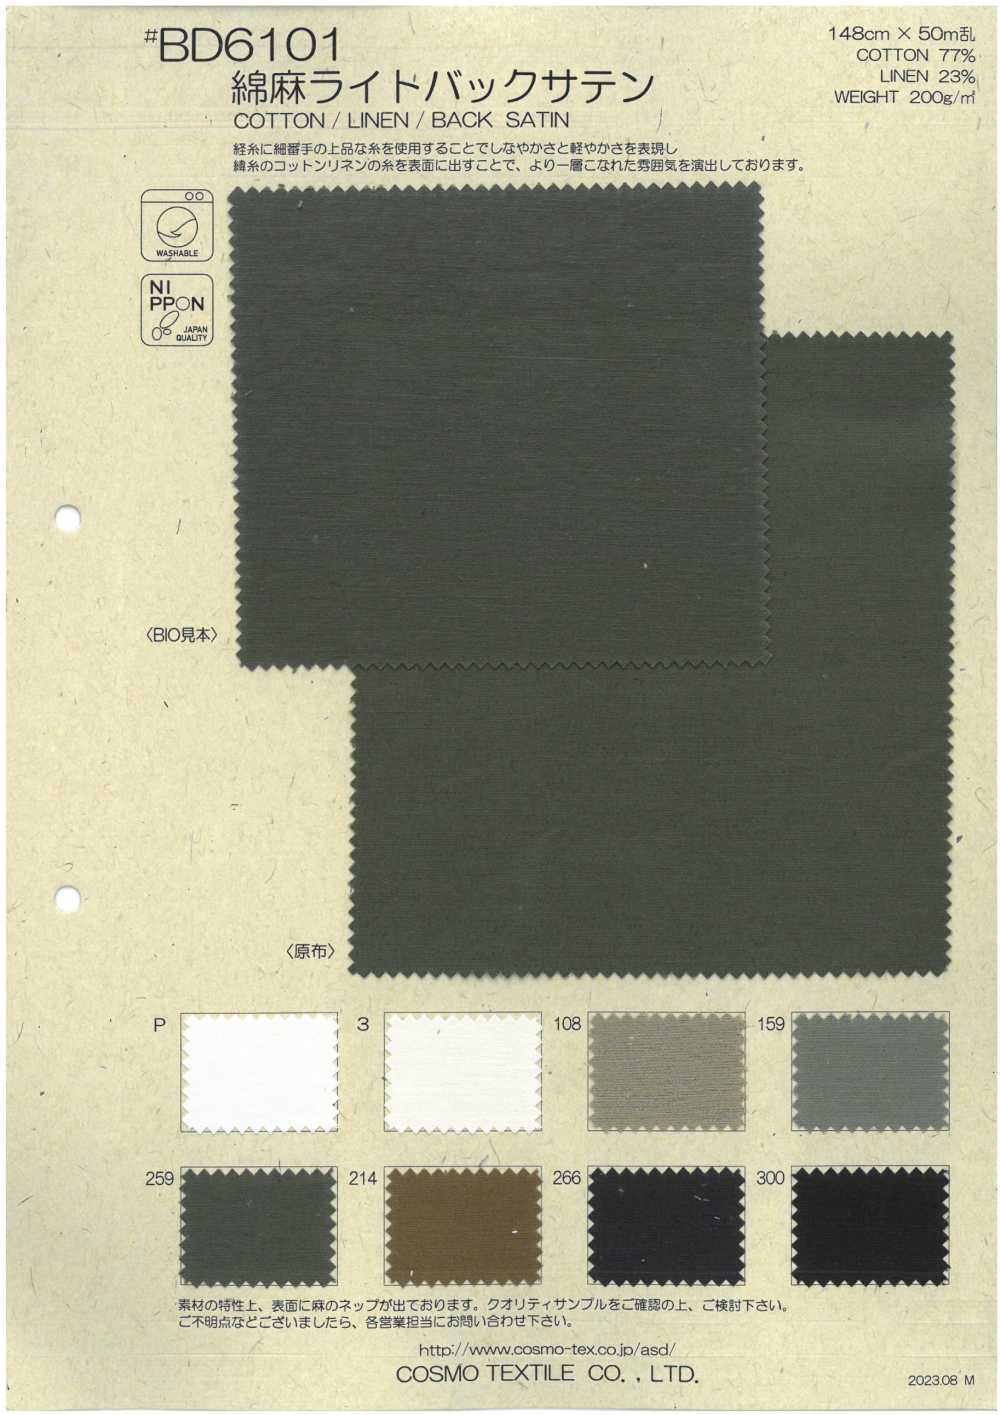 BD6101 Cotton Linen Light Back Satin[Textile / Fabric] COSMO TEXTILE